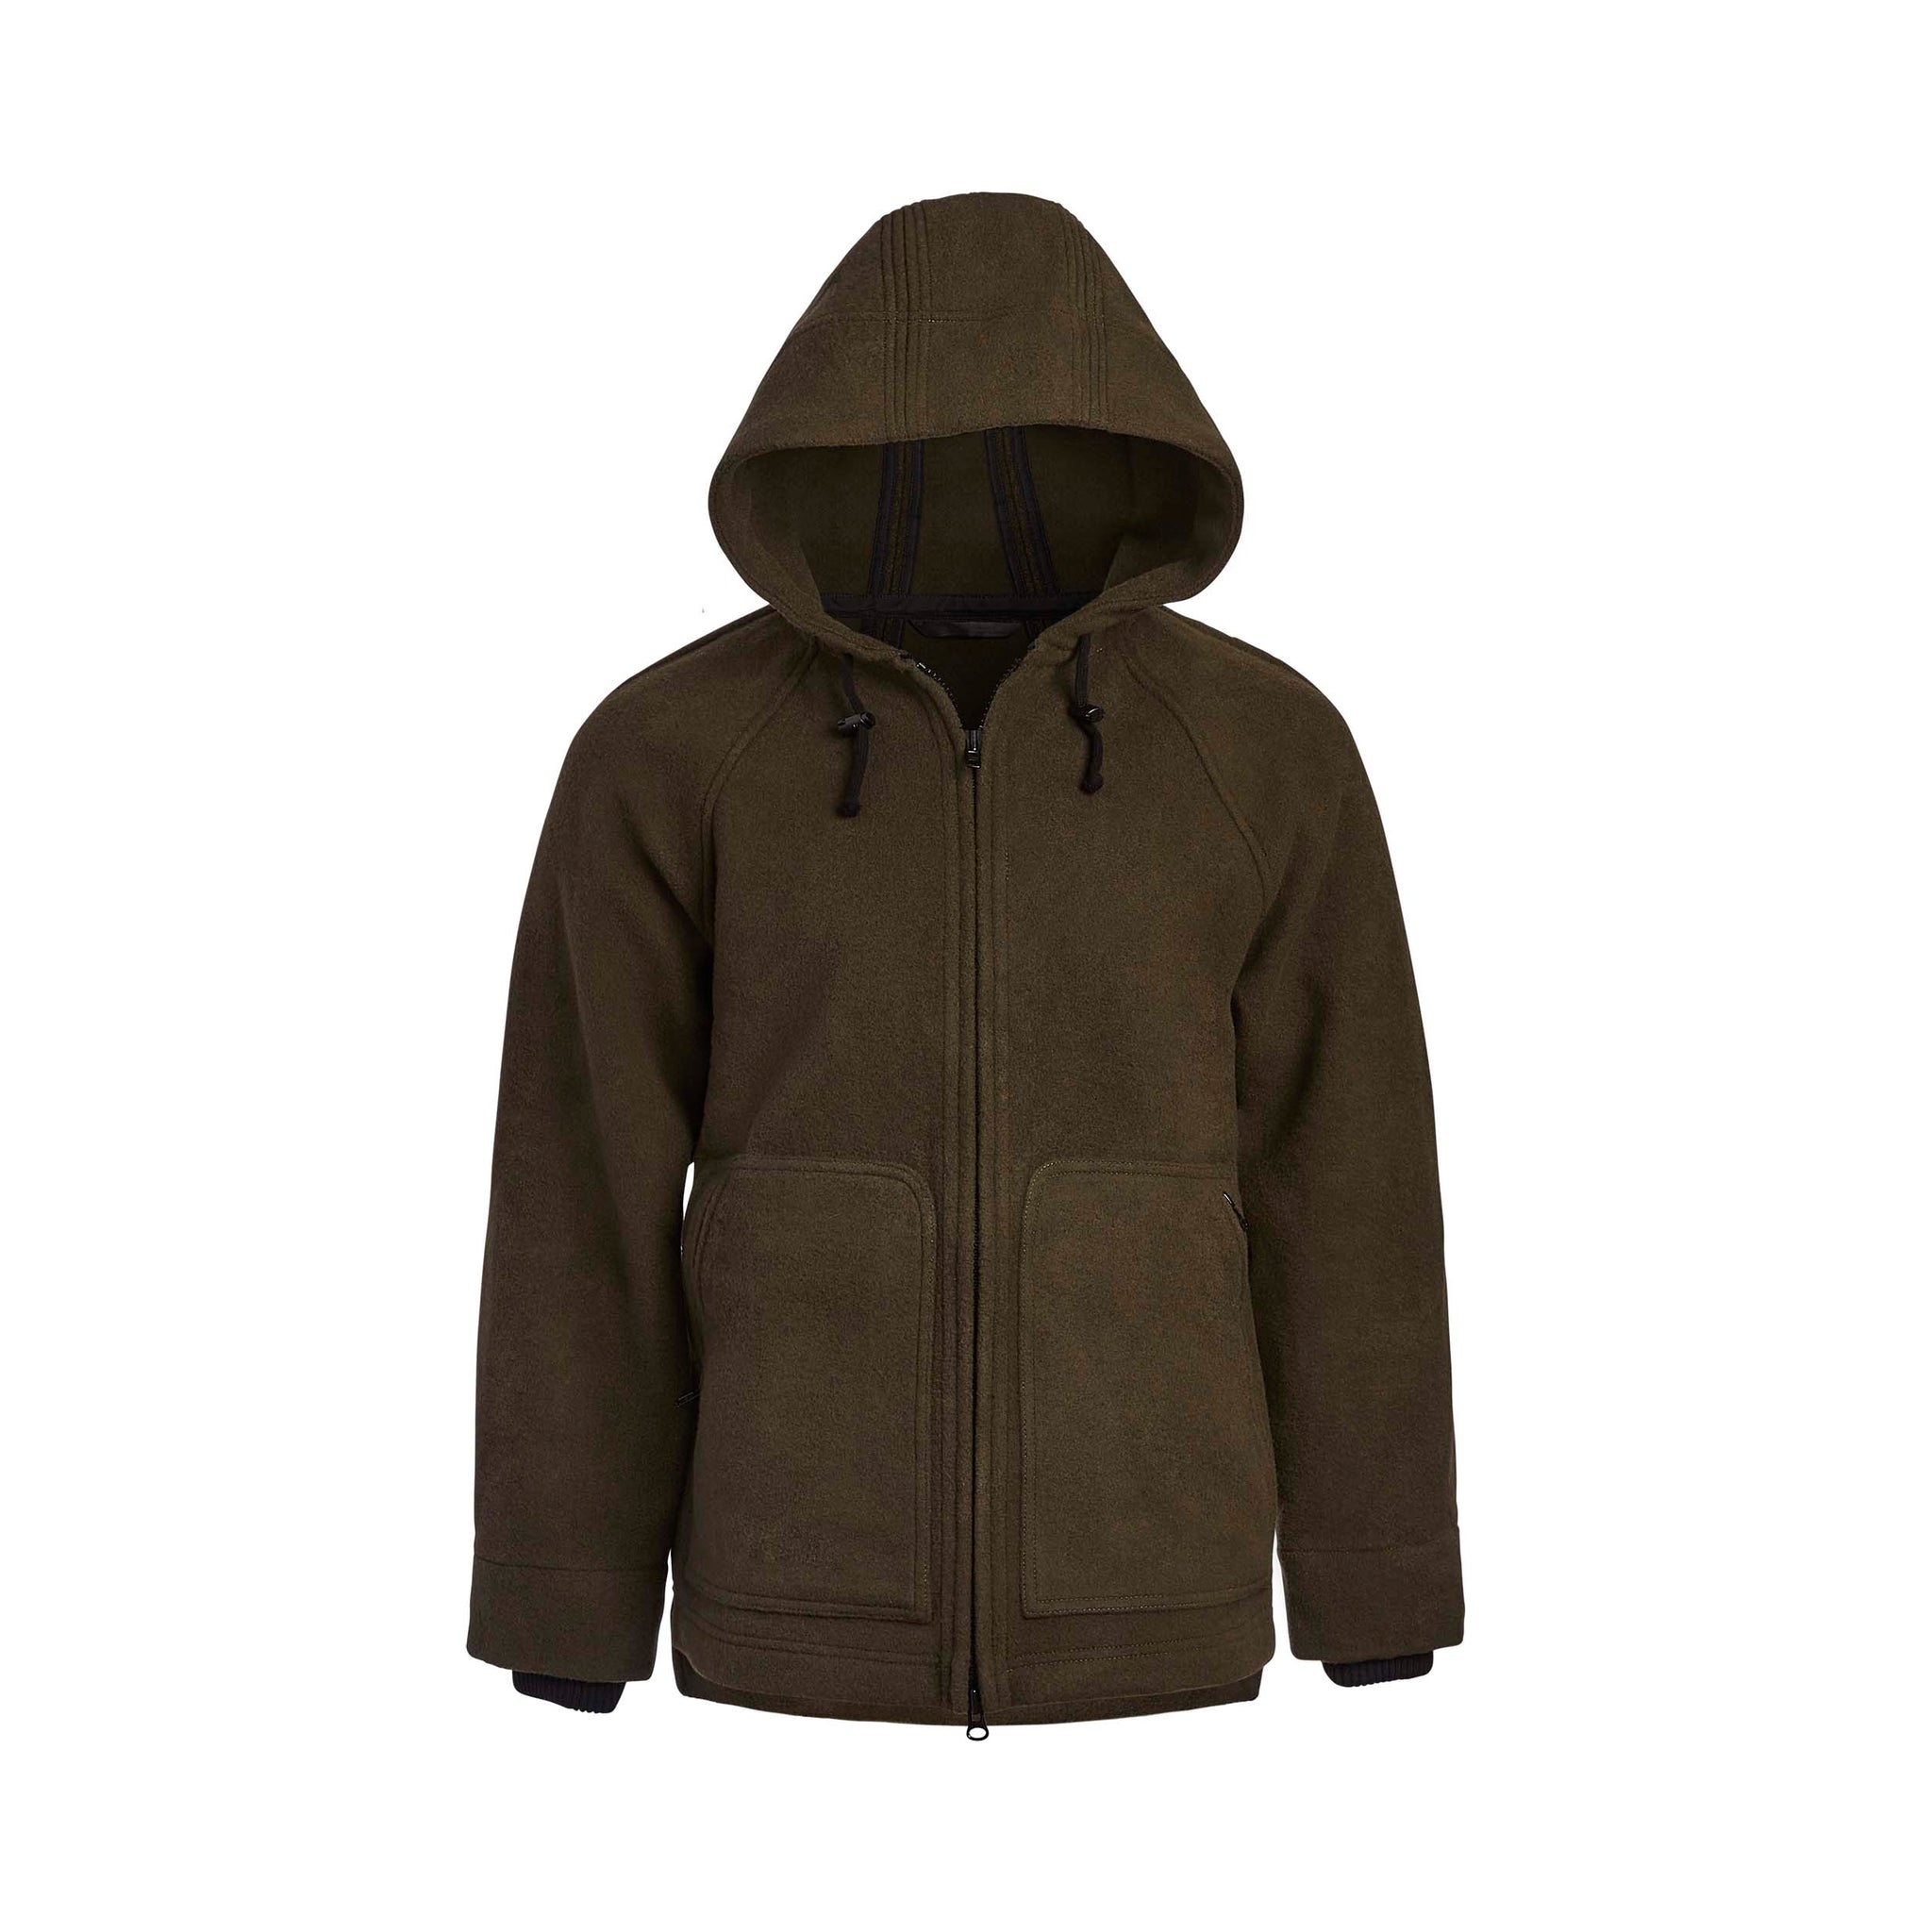 WeatherWool Hooded Jacket, 100% Merino Jacquard Fabric. Made in USA